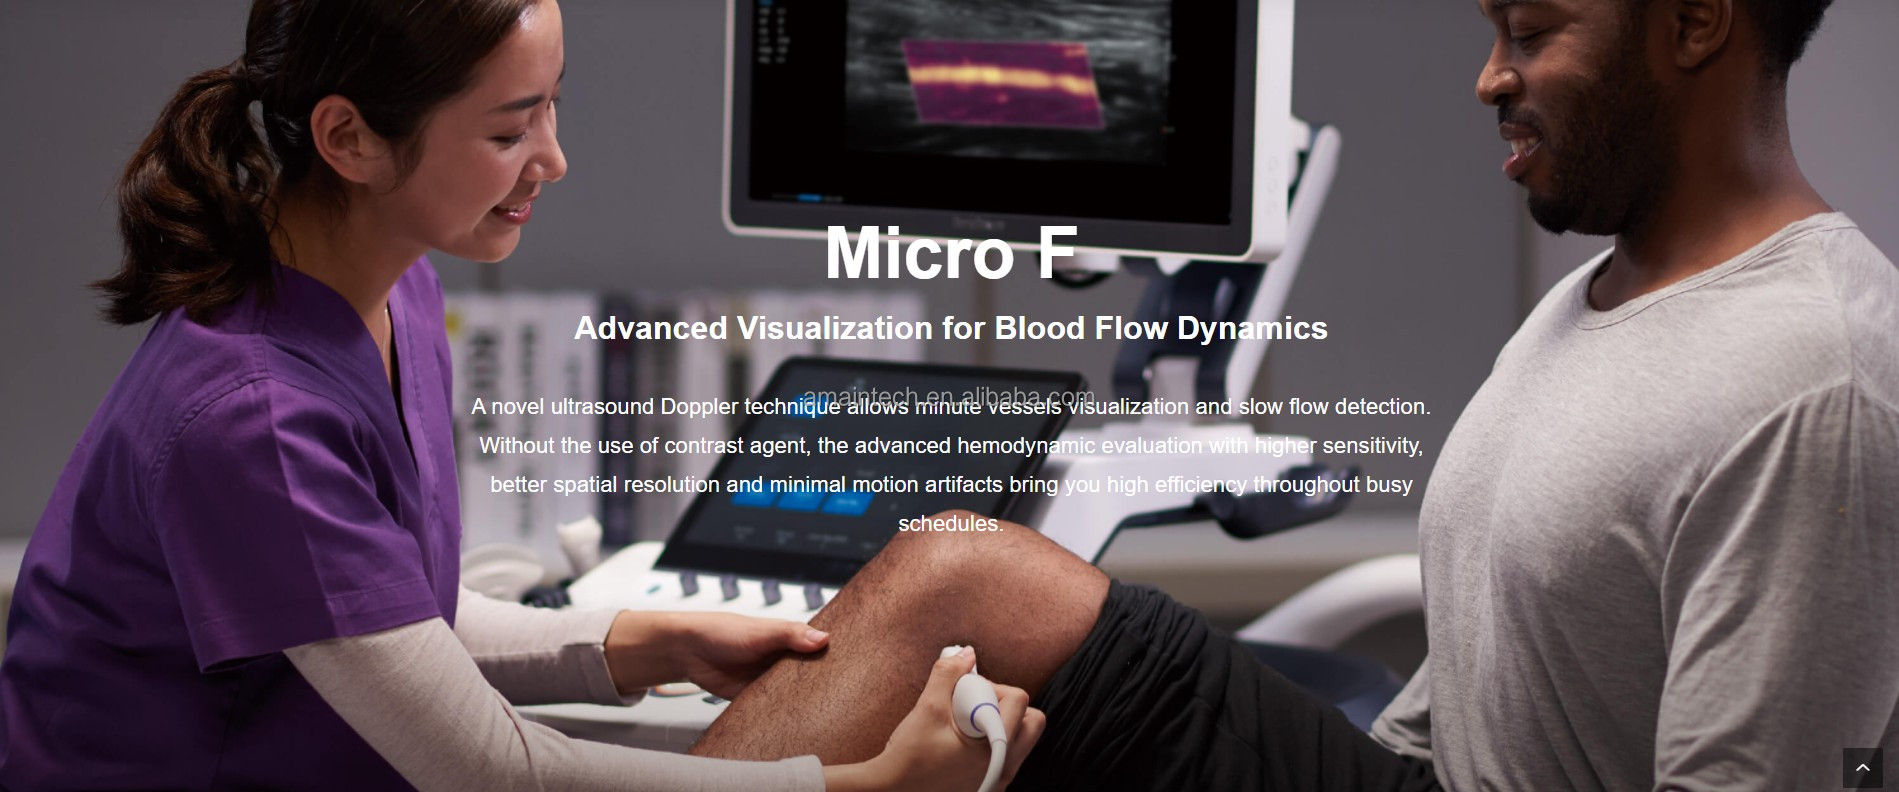 Sonoscape Enhanced Version Intelligent Wis+ platform Sonoscape S60 4D Trolley diagnosis ultrasound system With multi probes